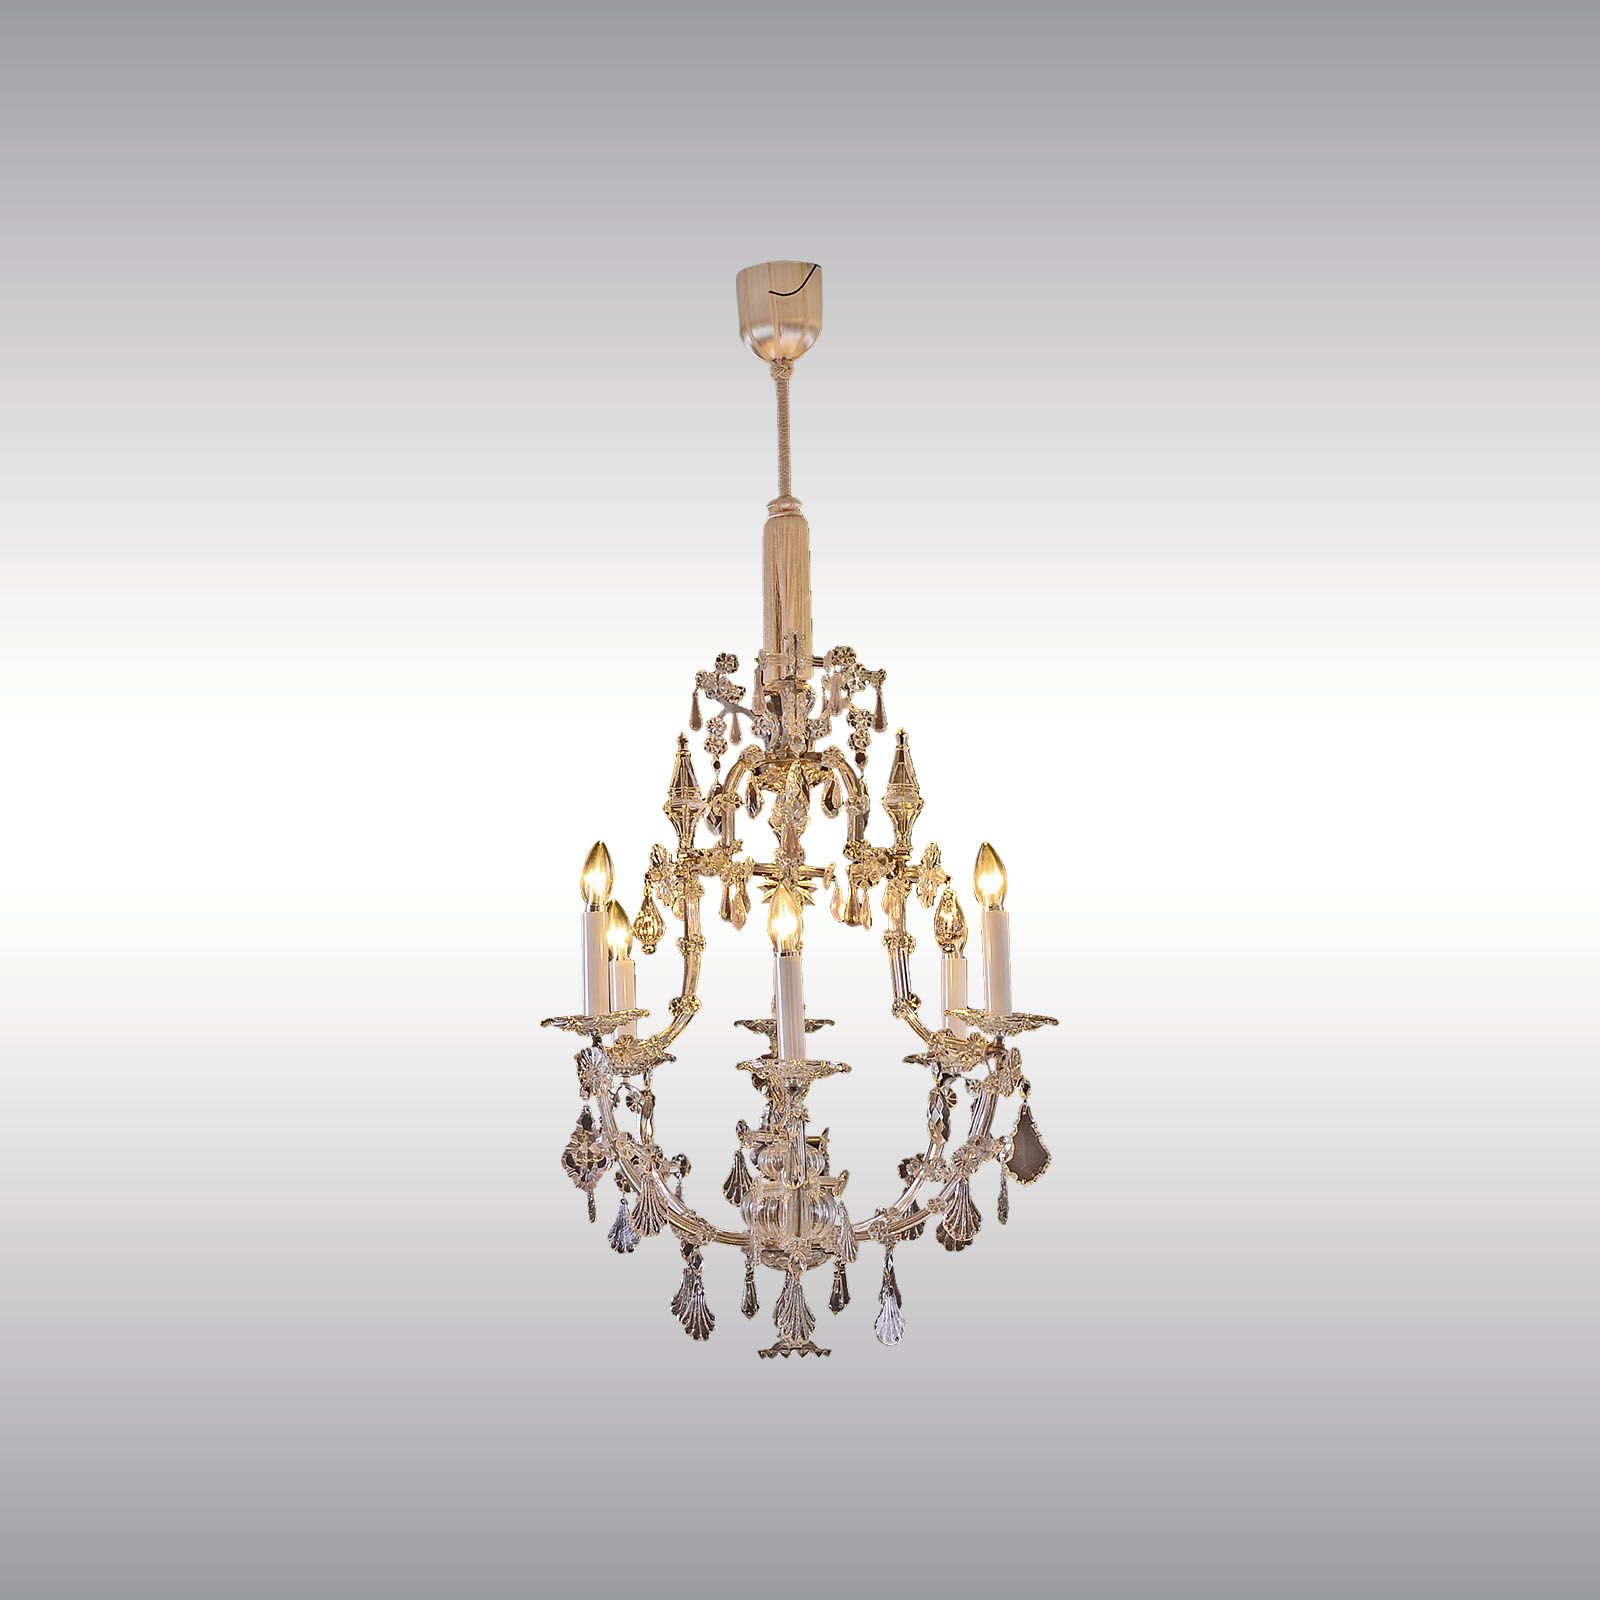 WOKA LAMPS VIENNA - OrderNr.: 80050|Maria Theresien Luster - Design: Maria Theresien Stil